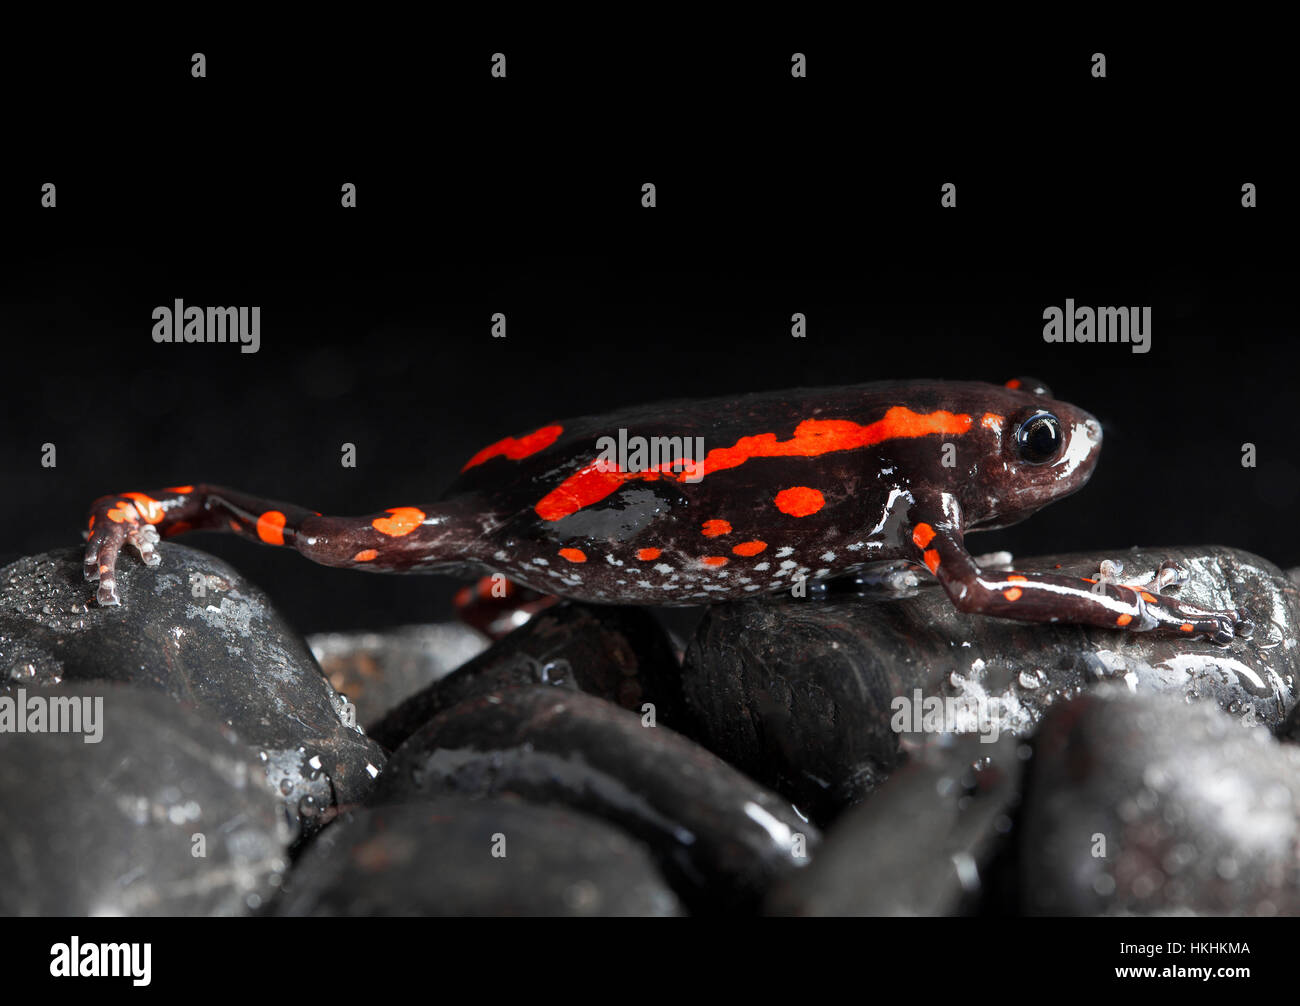 Black and Orange frog in studio with dark background Stock Photo